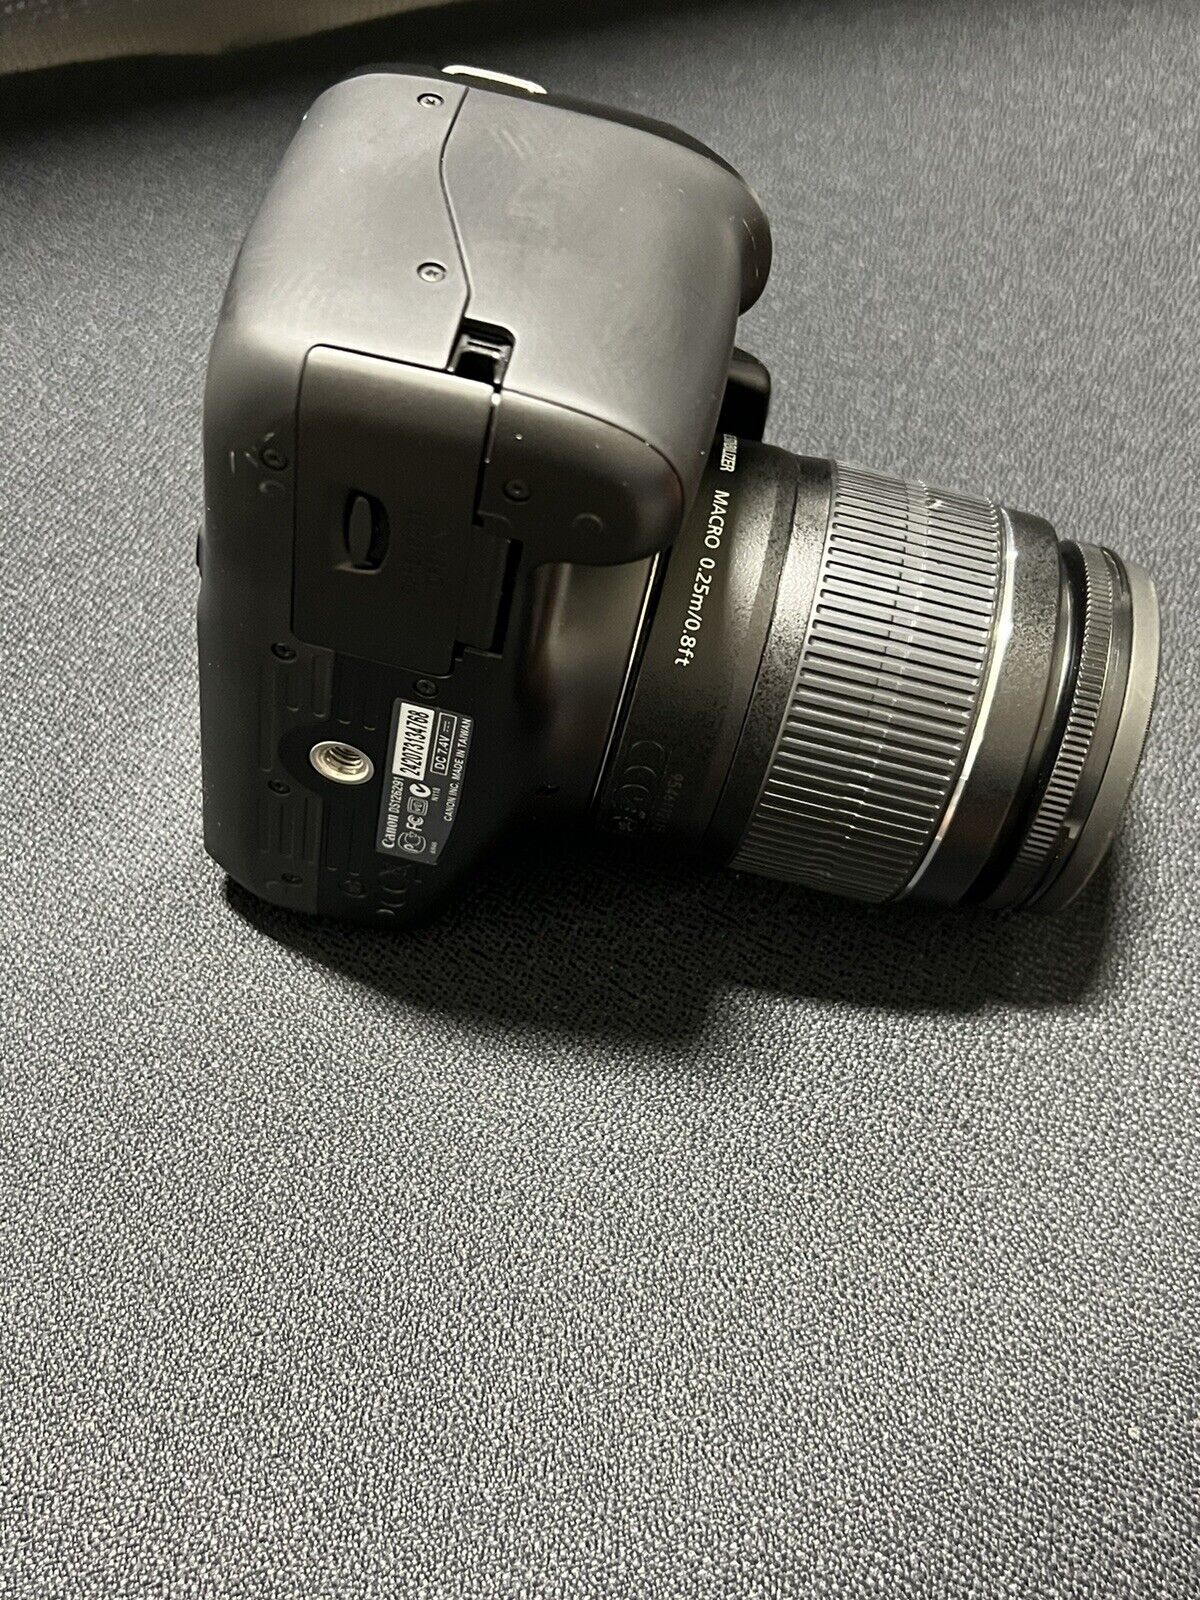 Canon EOS Rebel T3 Digital SLR Camera Black with EFS 18-55mm Lens